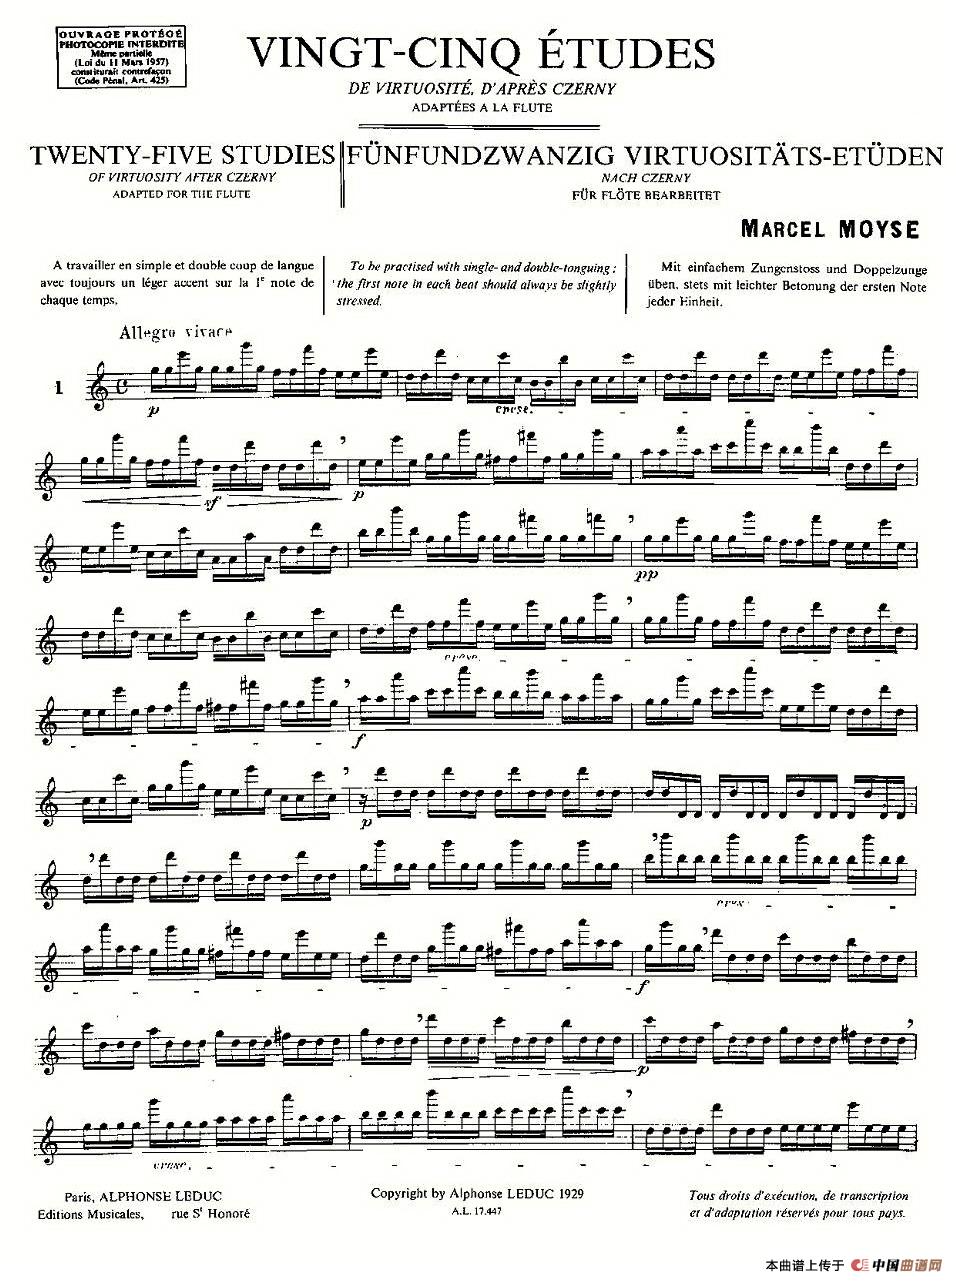 Moyse - 25 Studies after Czerny flute  [1]（25首改编自车尔